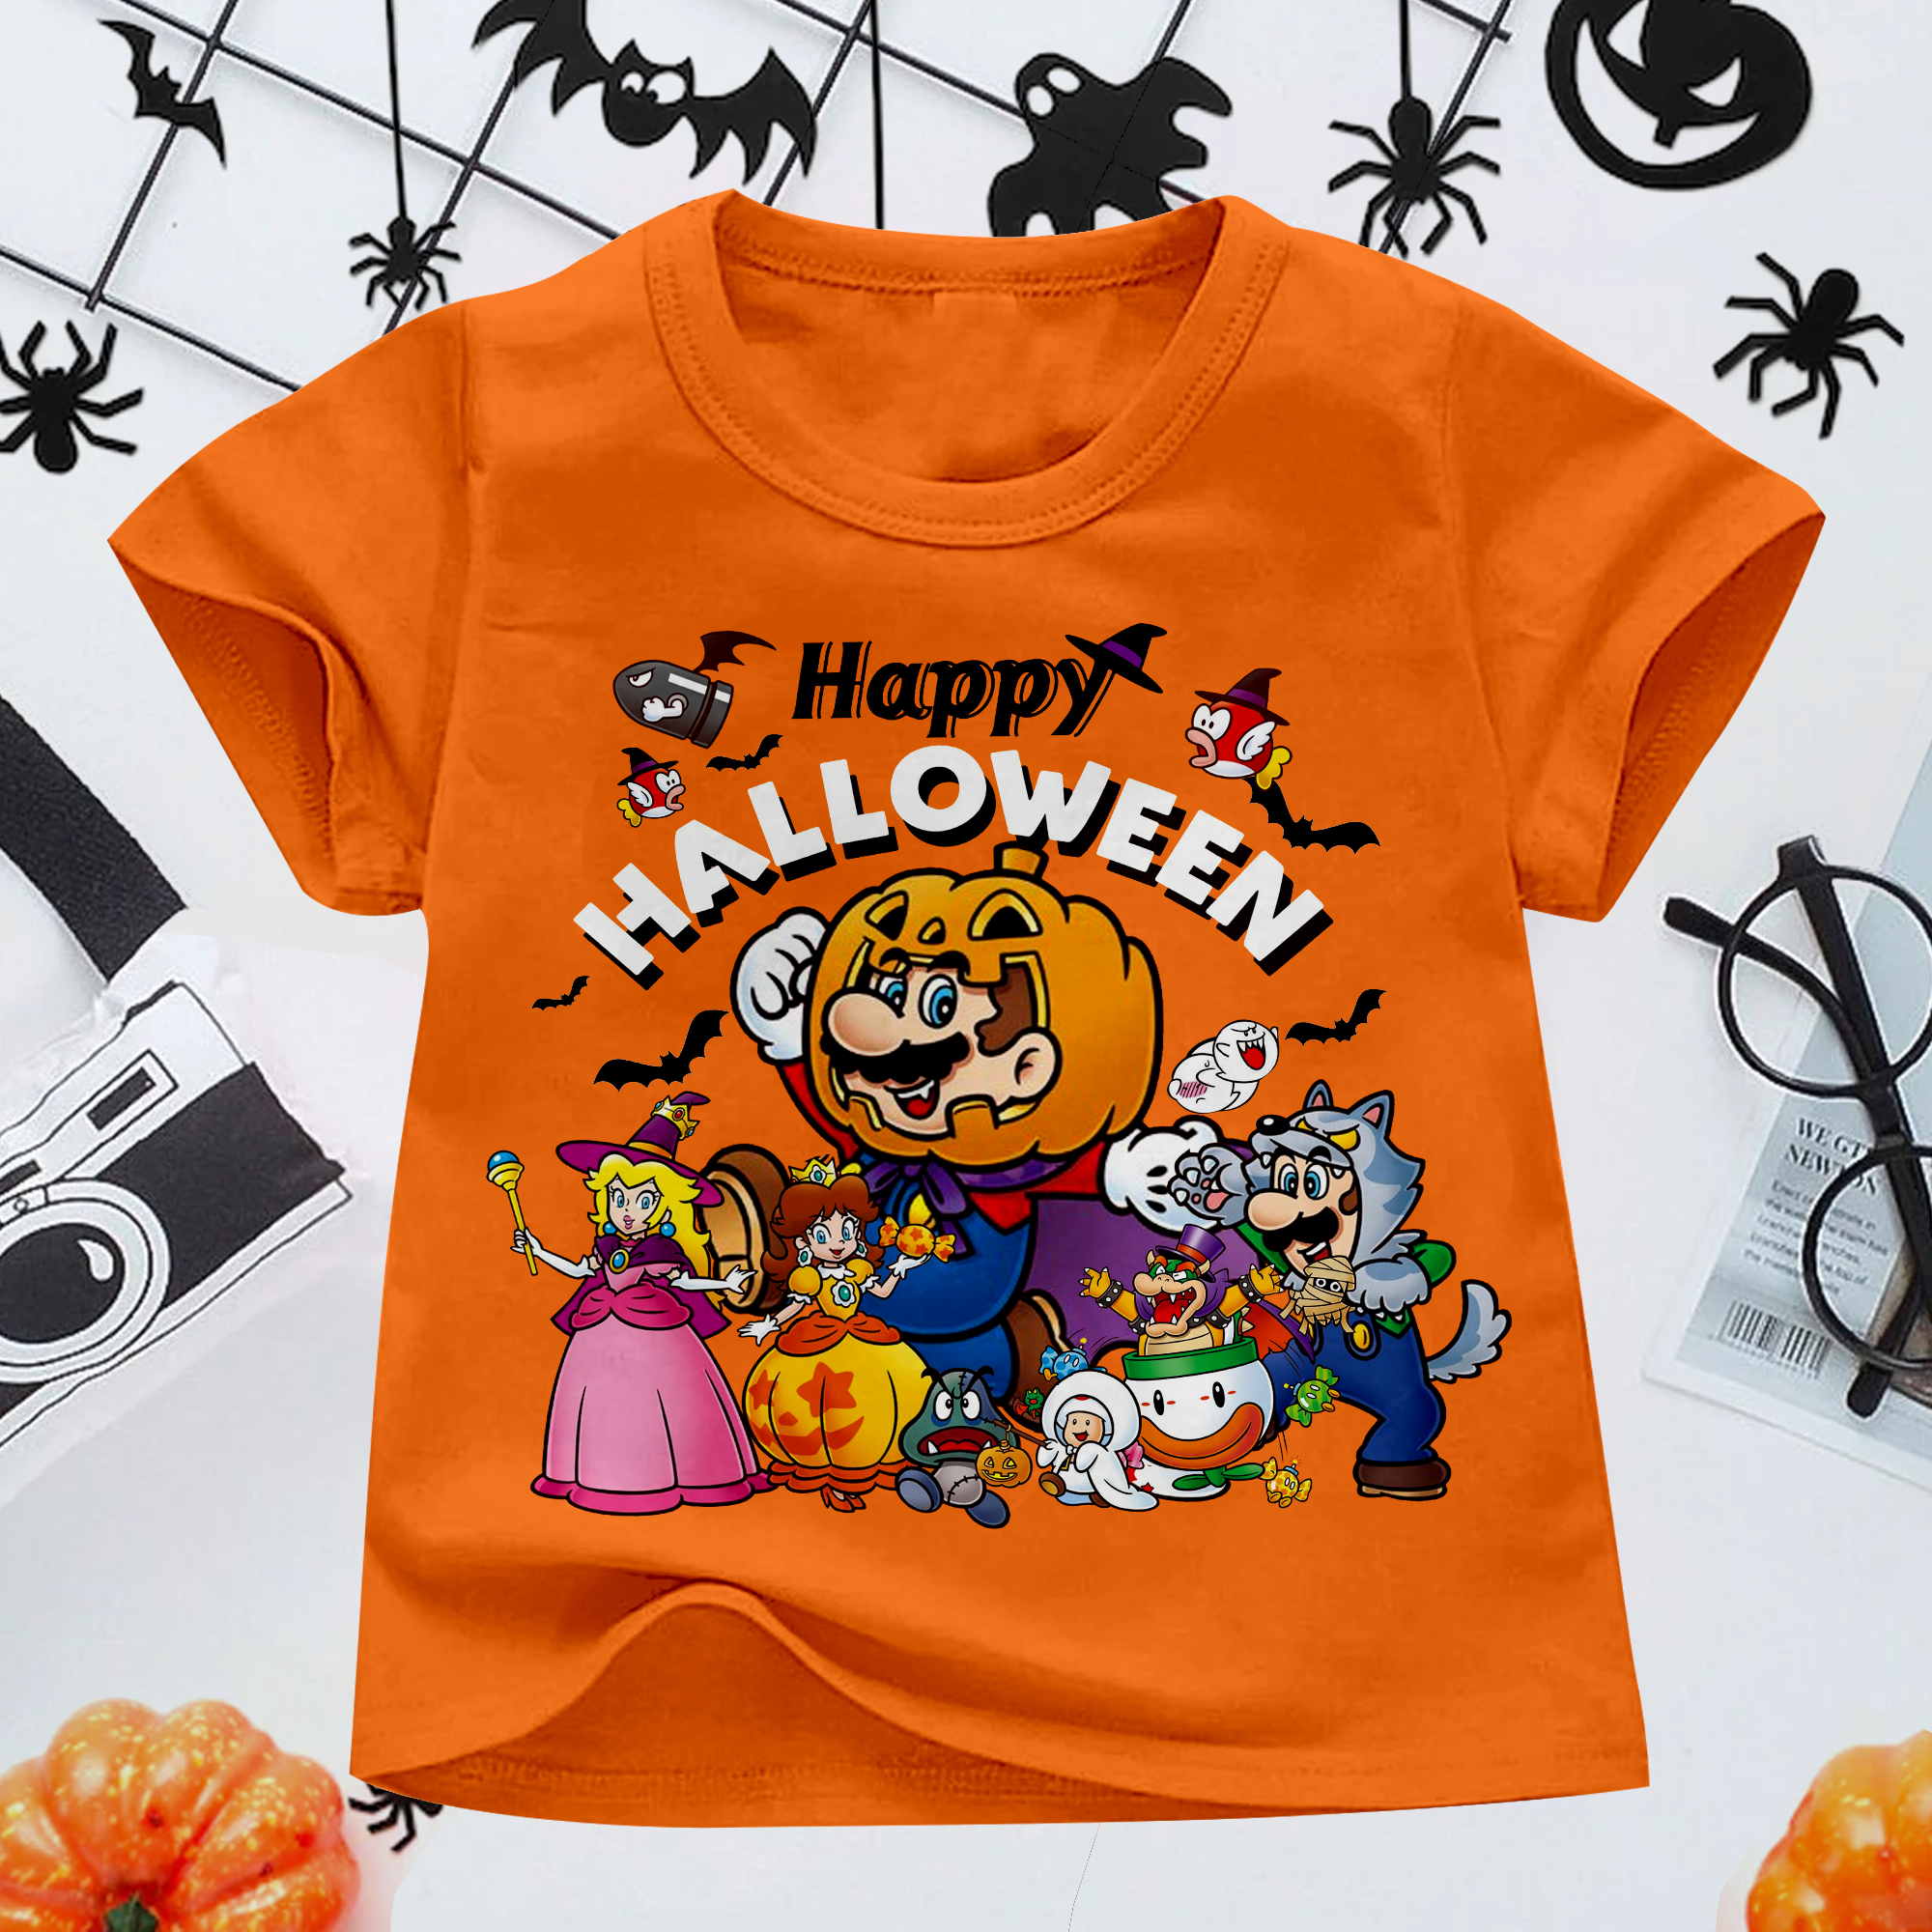 Super Mario Halloween Shirt, Super Mario Halloween Party, Super Mario Halloween Costume, Trick Or Treat Shirt